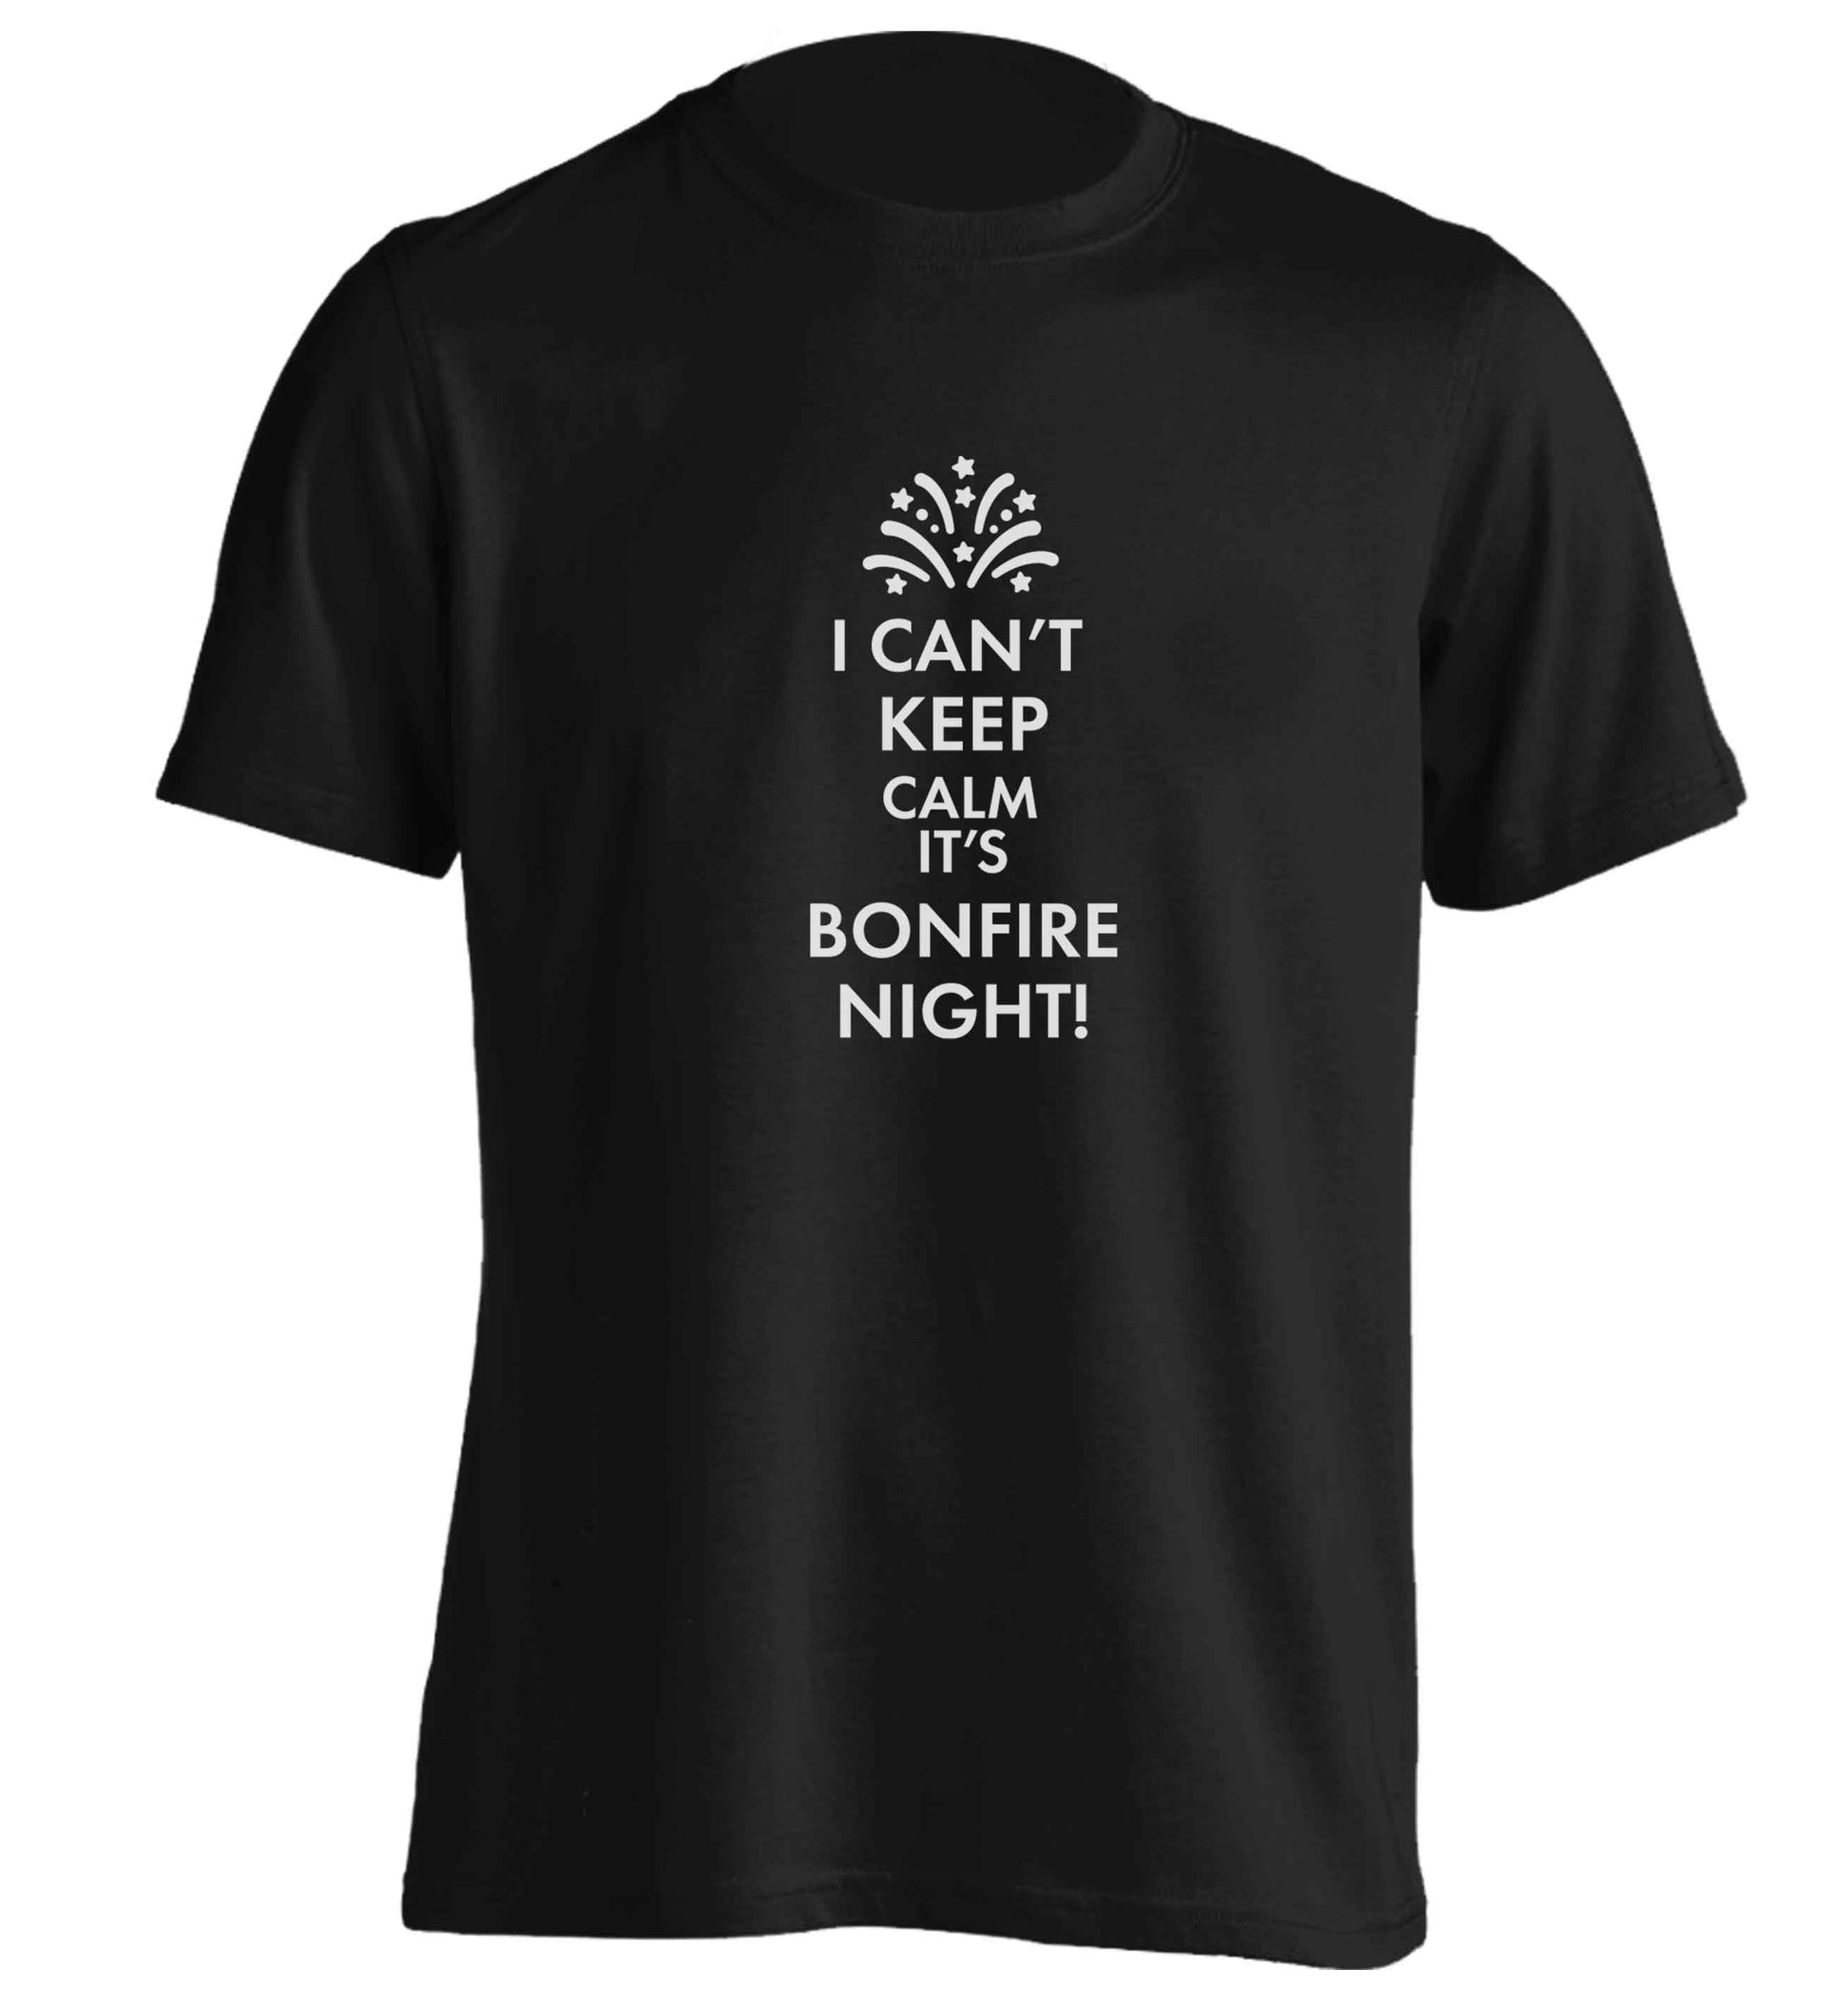 I can't keep calm its bonfire night adults unisex black Tshirt 2XL